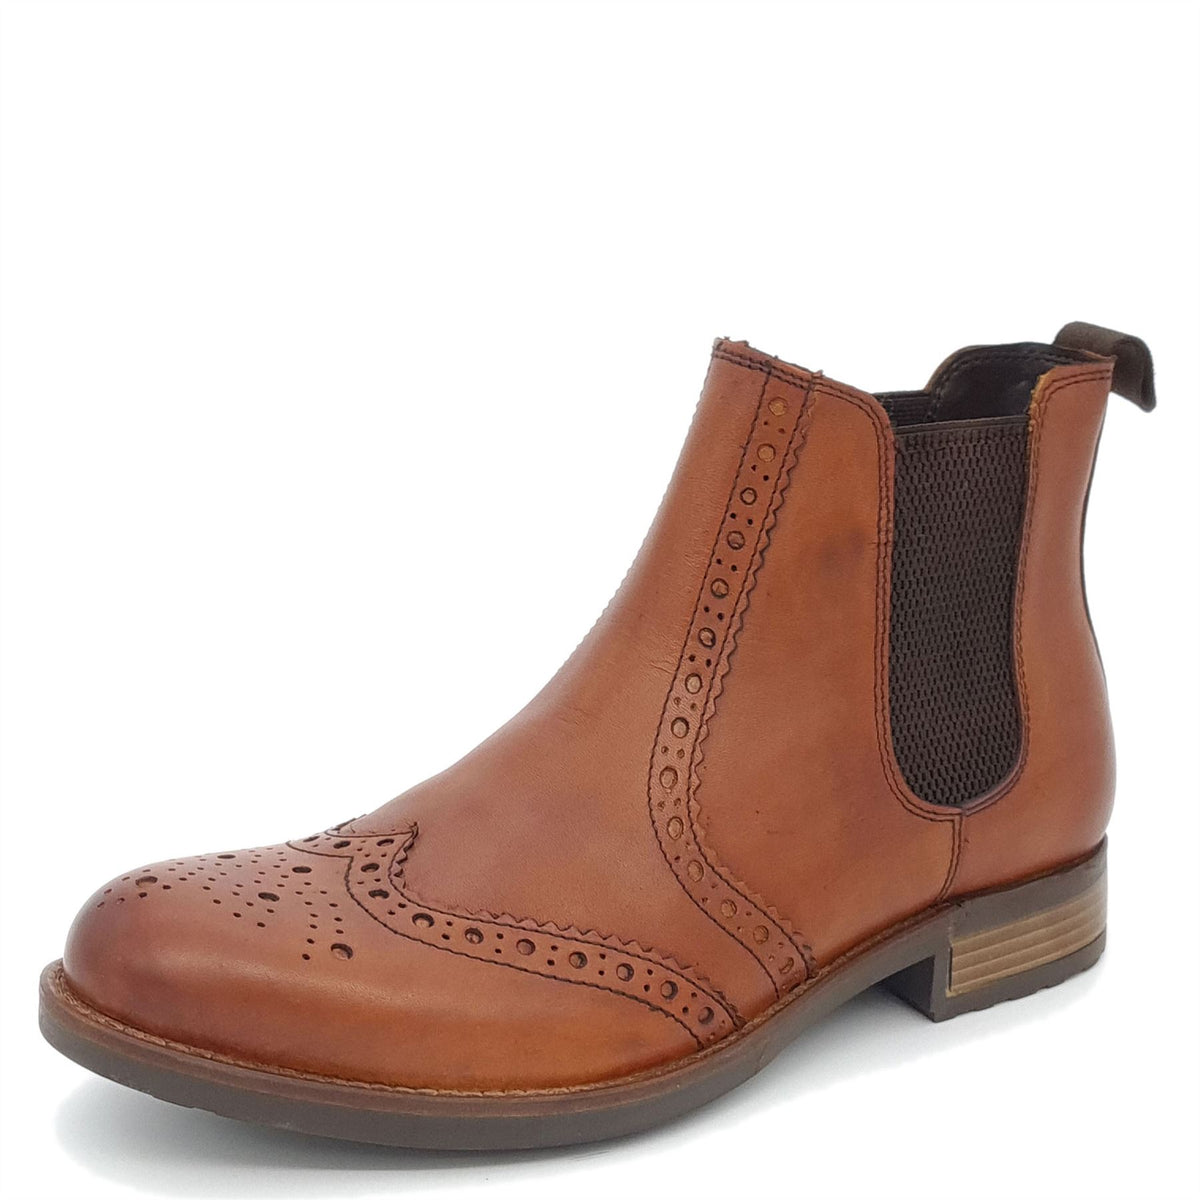 HX London Albert Brogue Chelsea Leather Boots